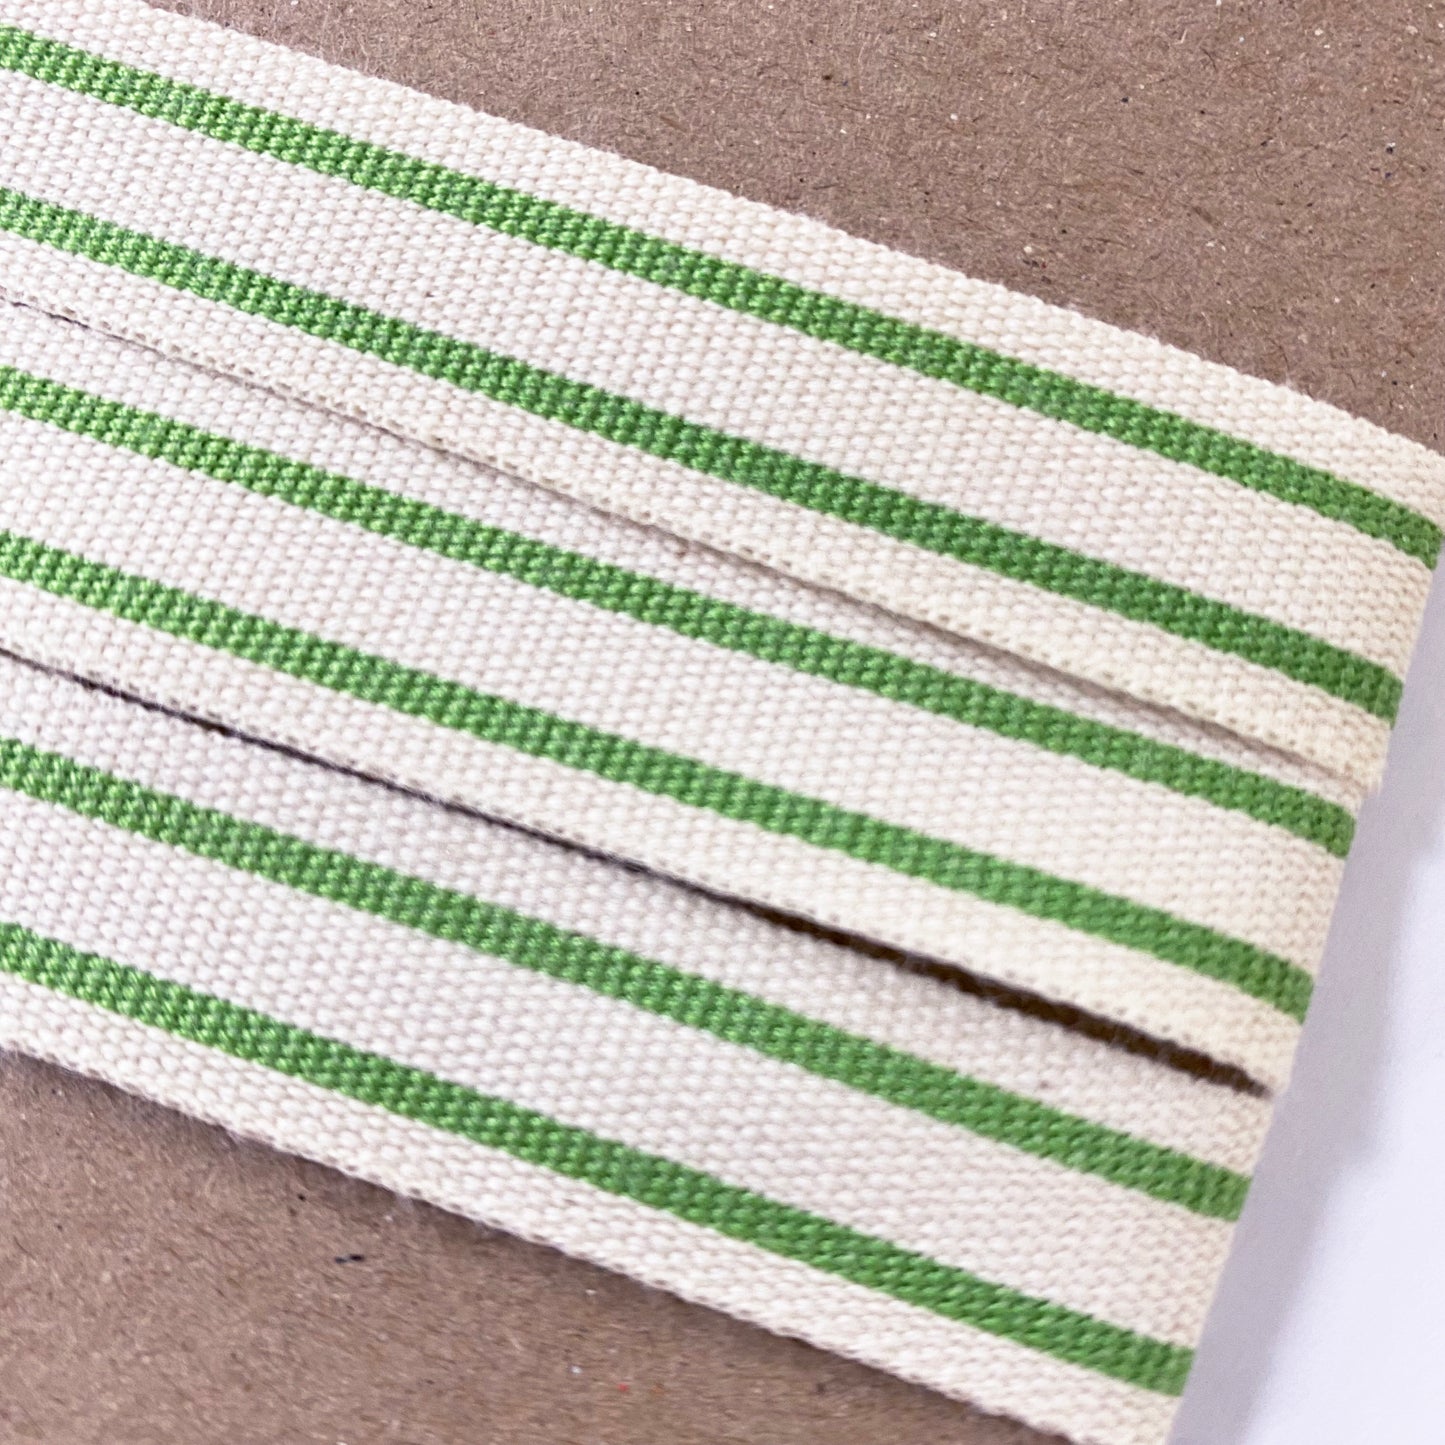 Cotton Ribbon | Green Cream Stripe Woven Cotton Ticking | 1m 20m Roll